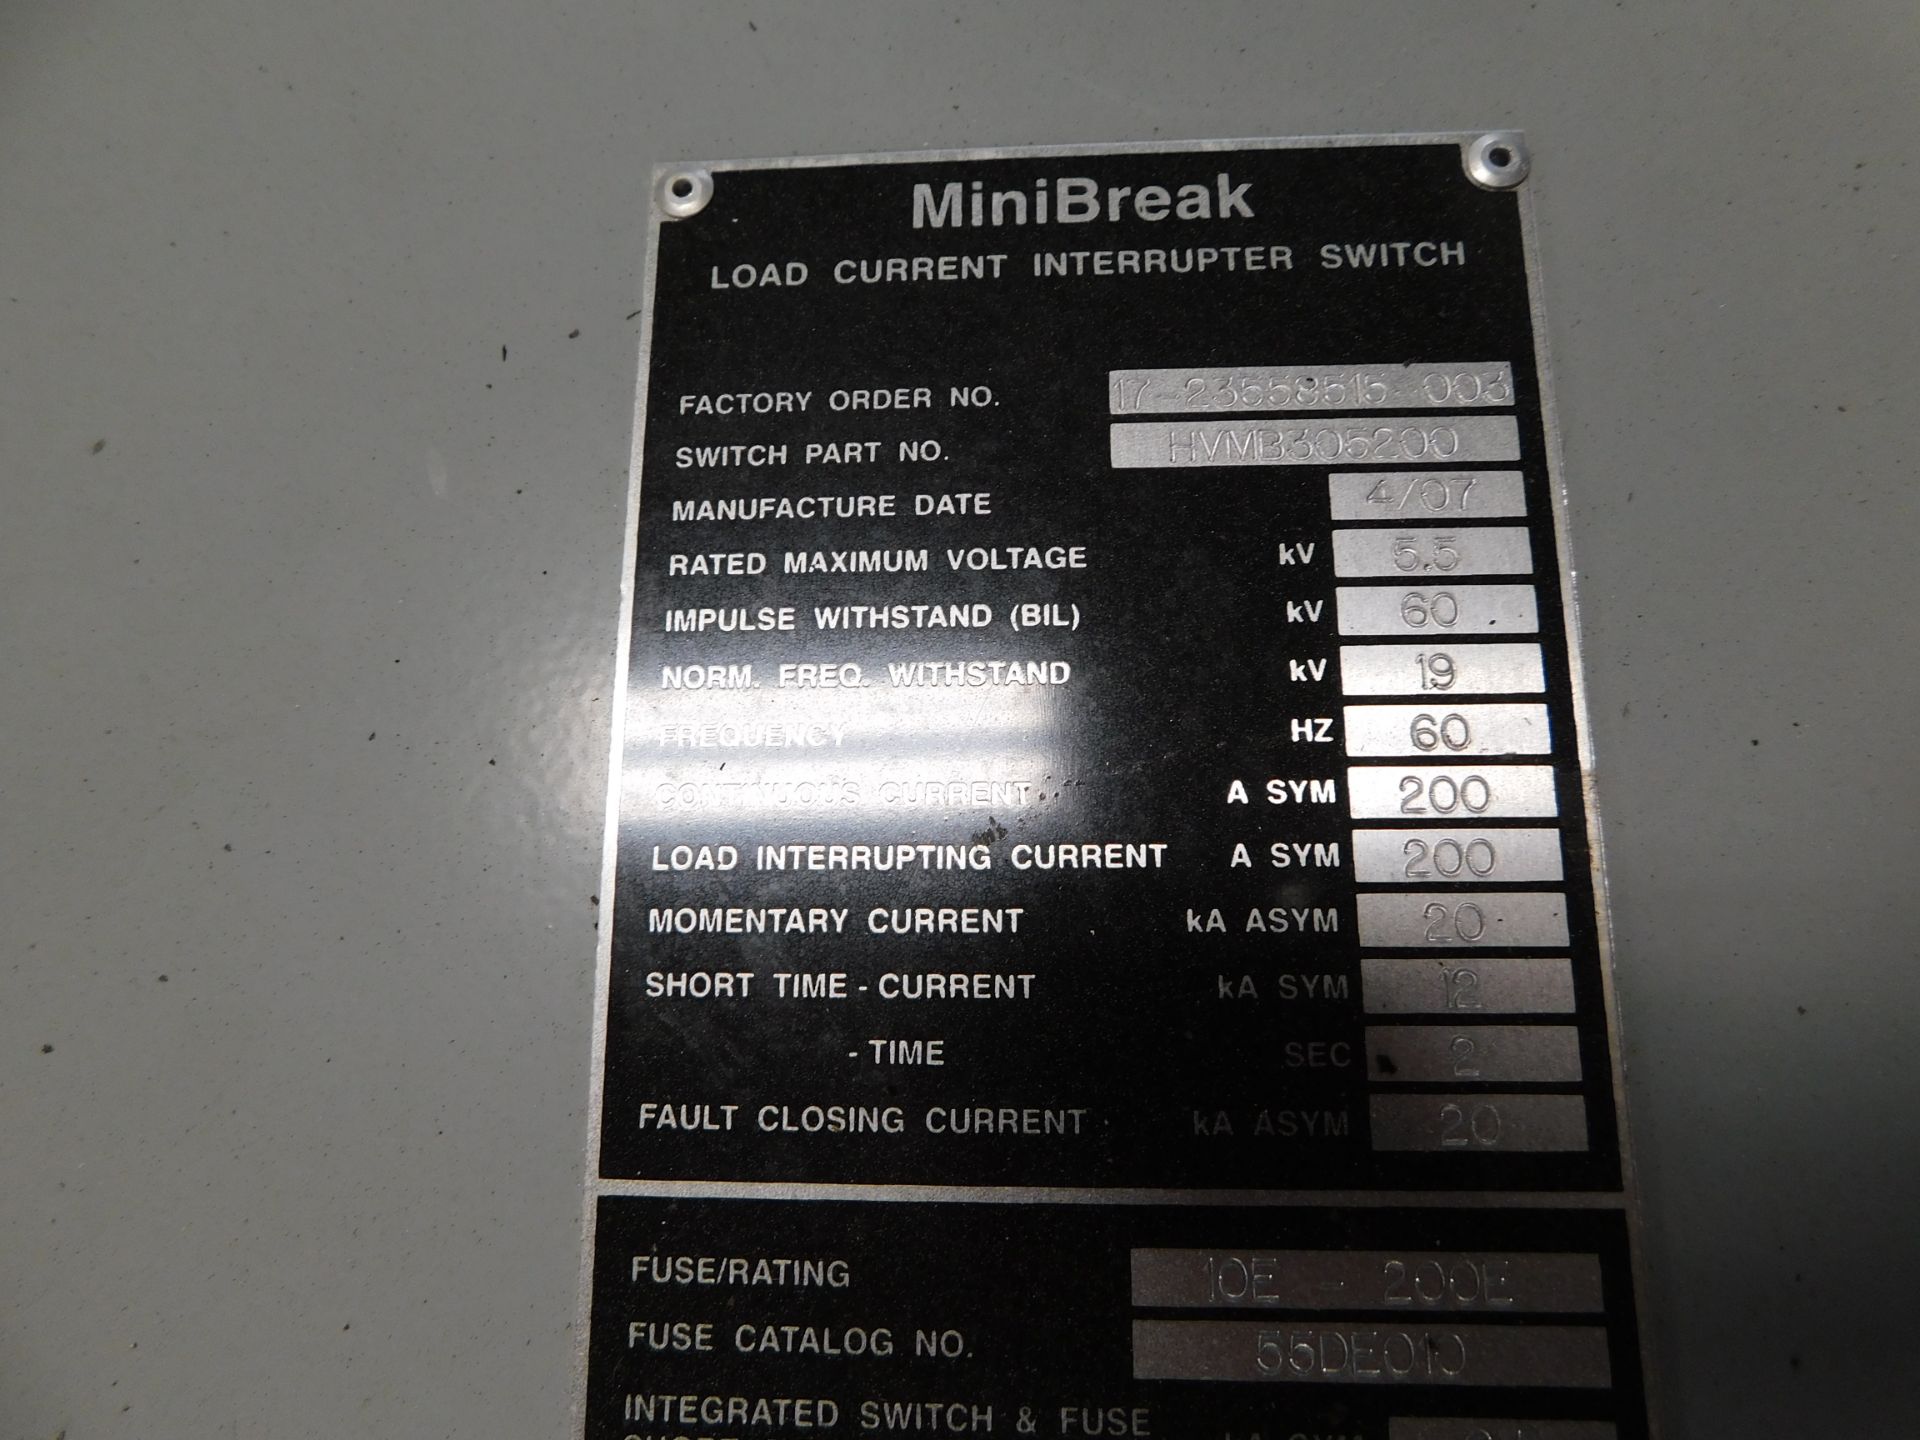 Square D Mini Break Load Interrupter Switch HVMB305200. 200 Amp. - Image 3 of 3